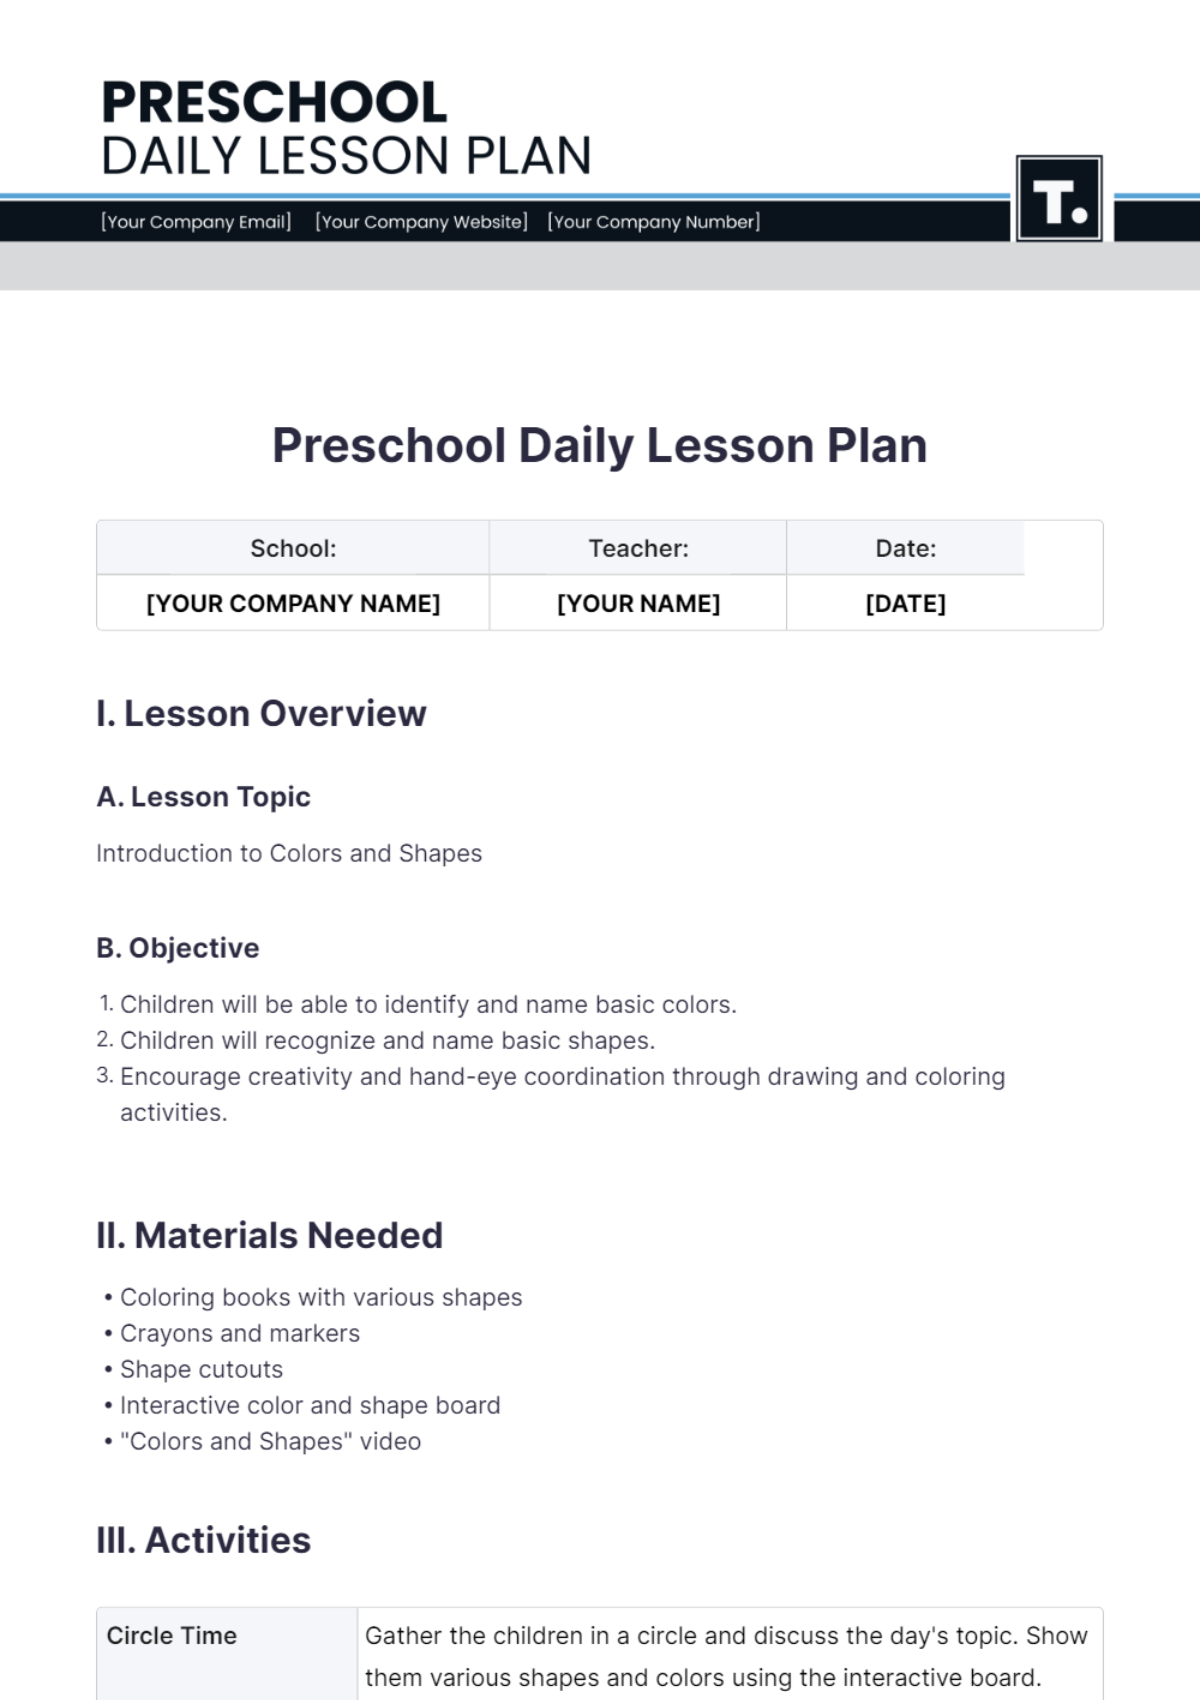 Free Preschool Daily Lesson Plan Template